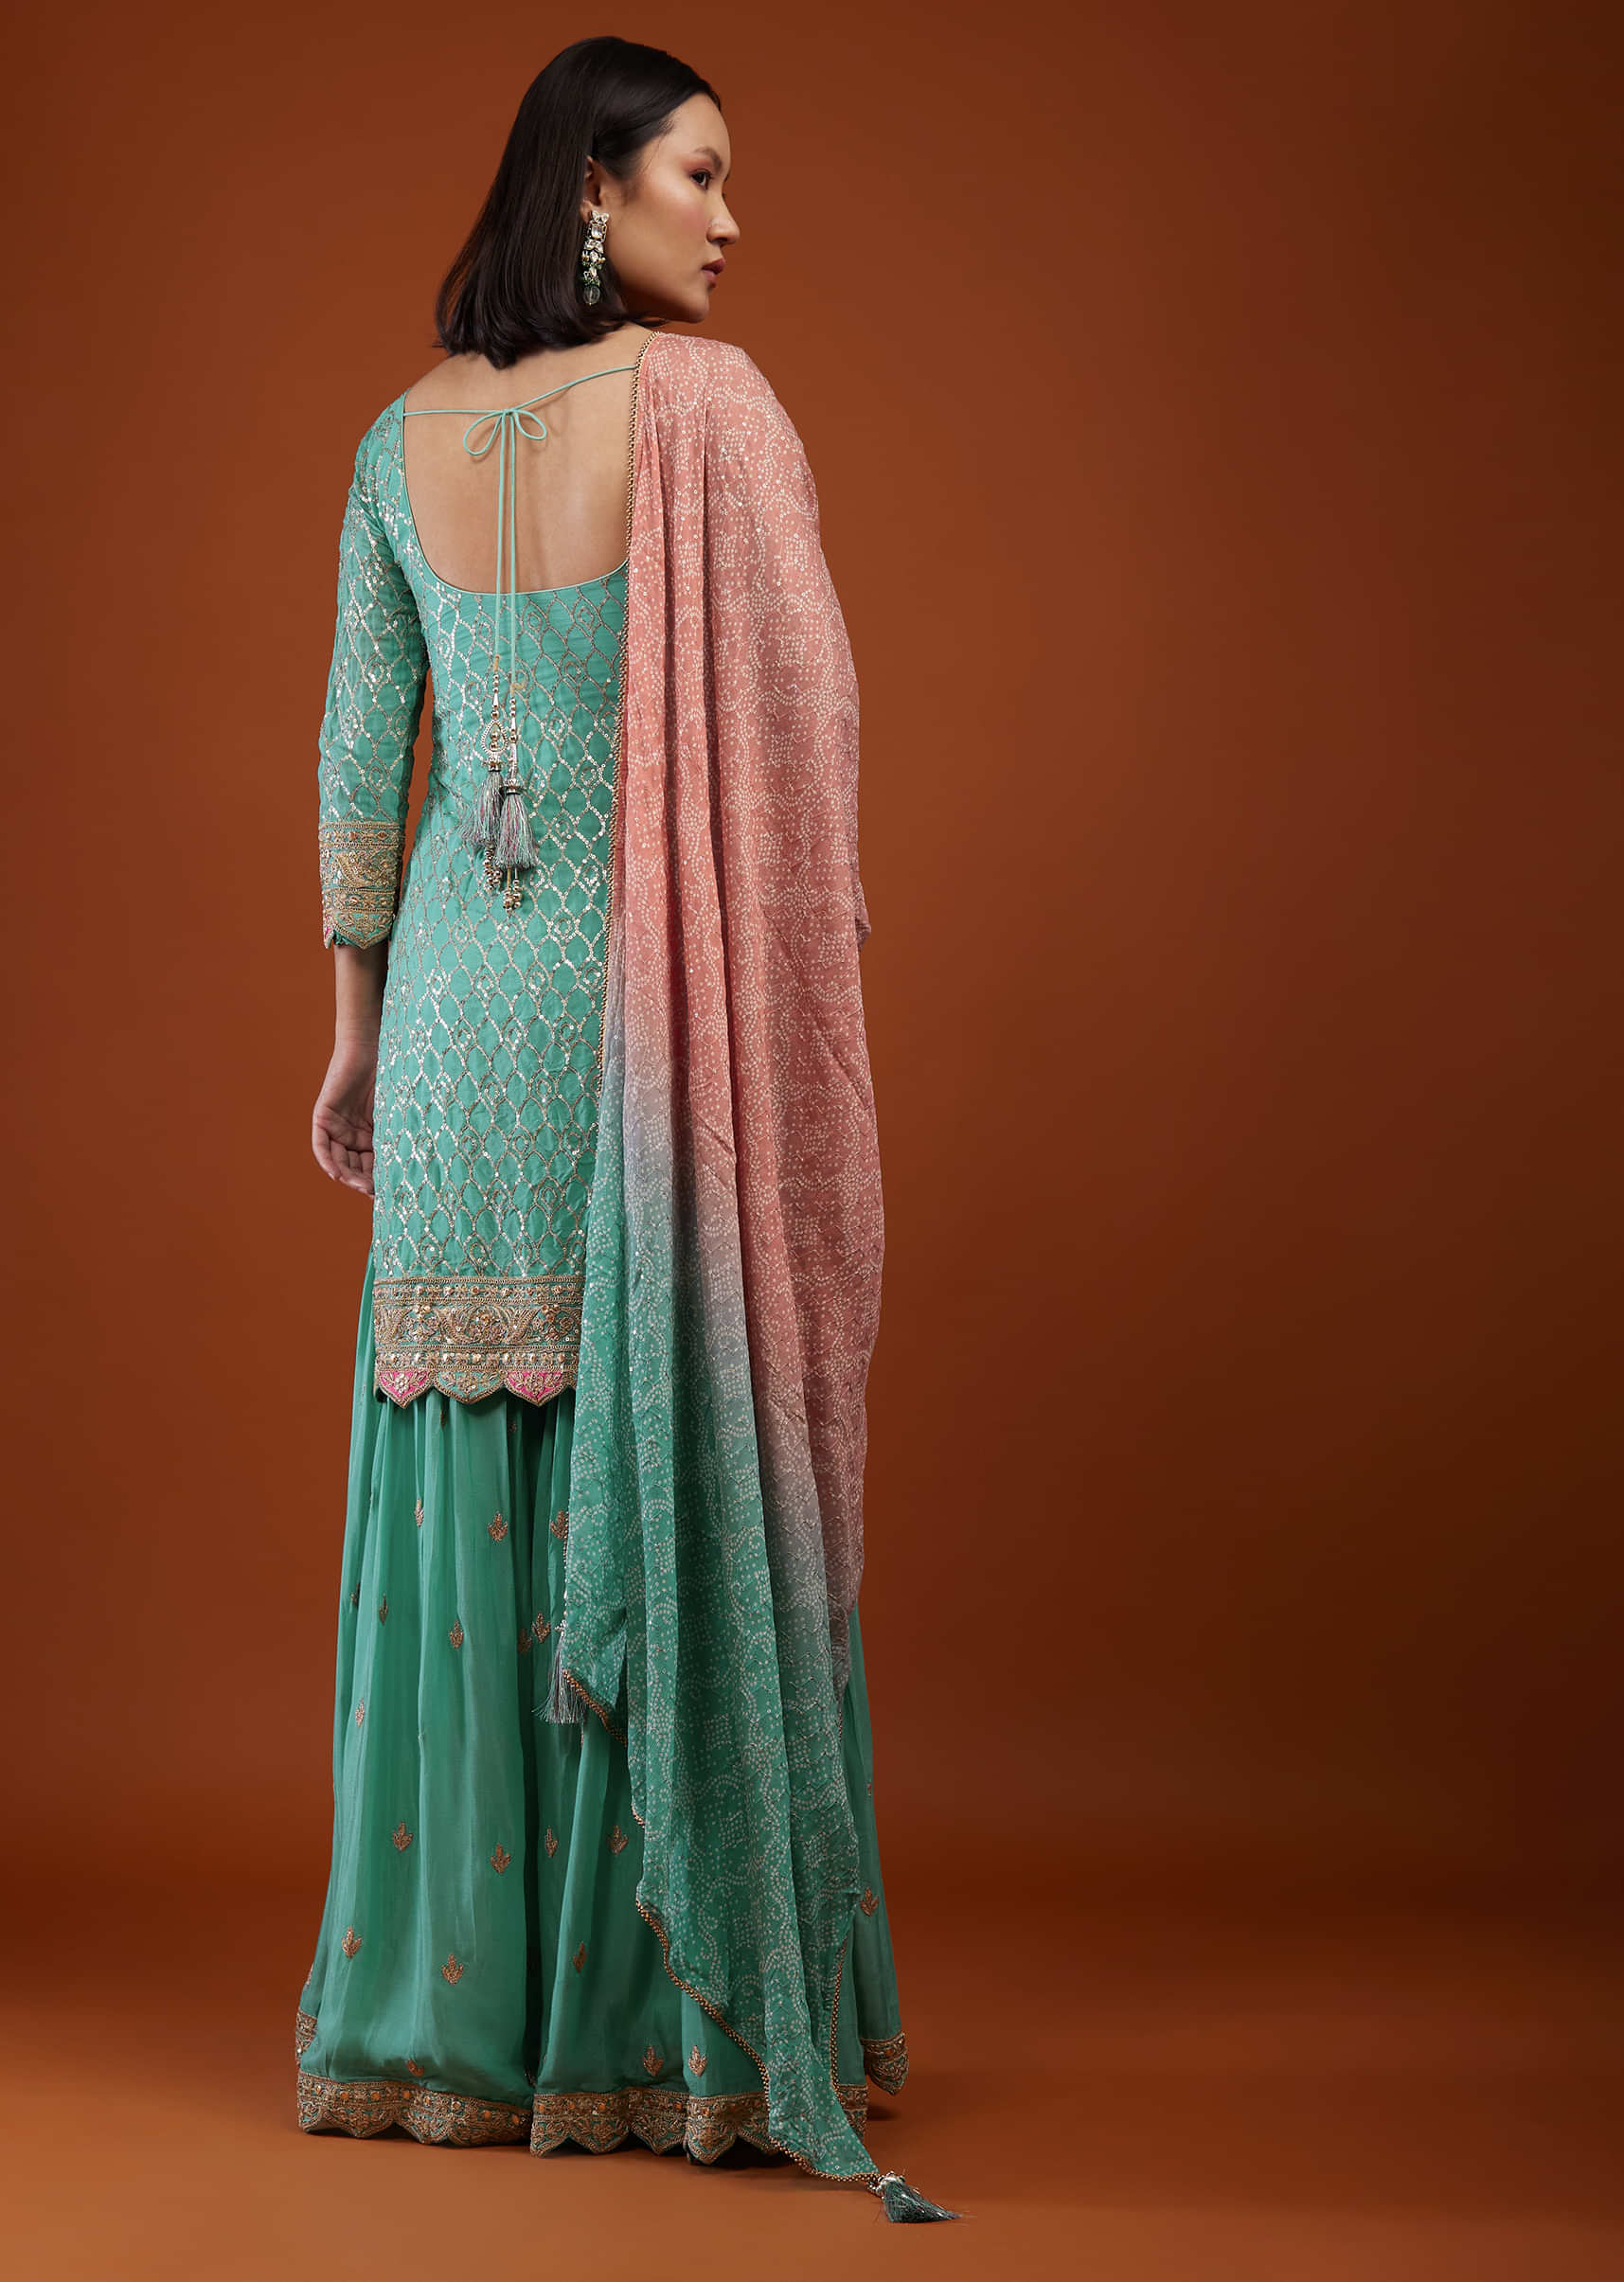 Sea Green Sharara Suit With Embroidery And Bandhani Dupatta